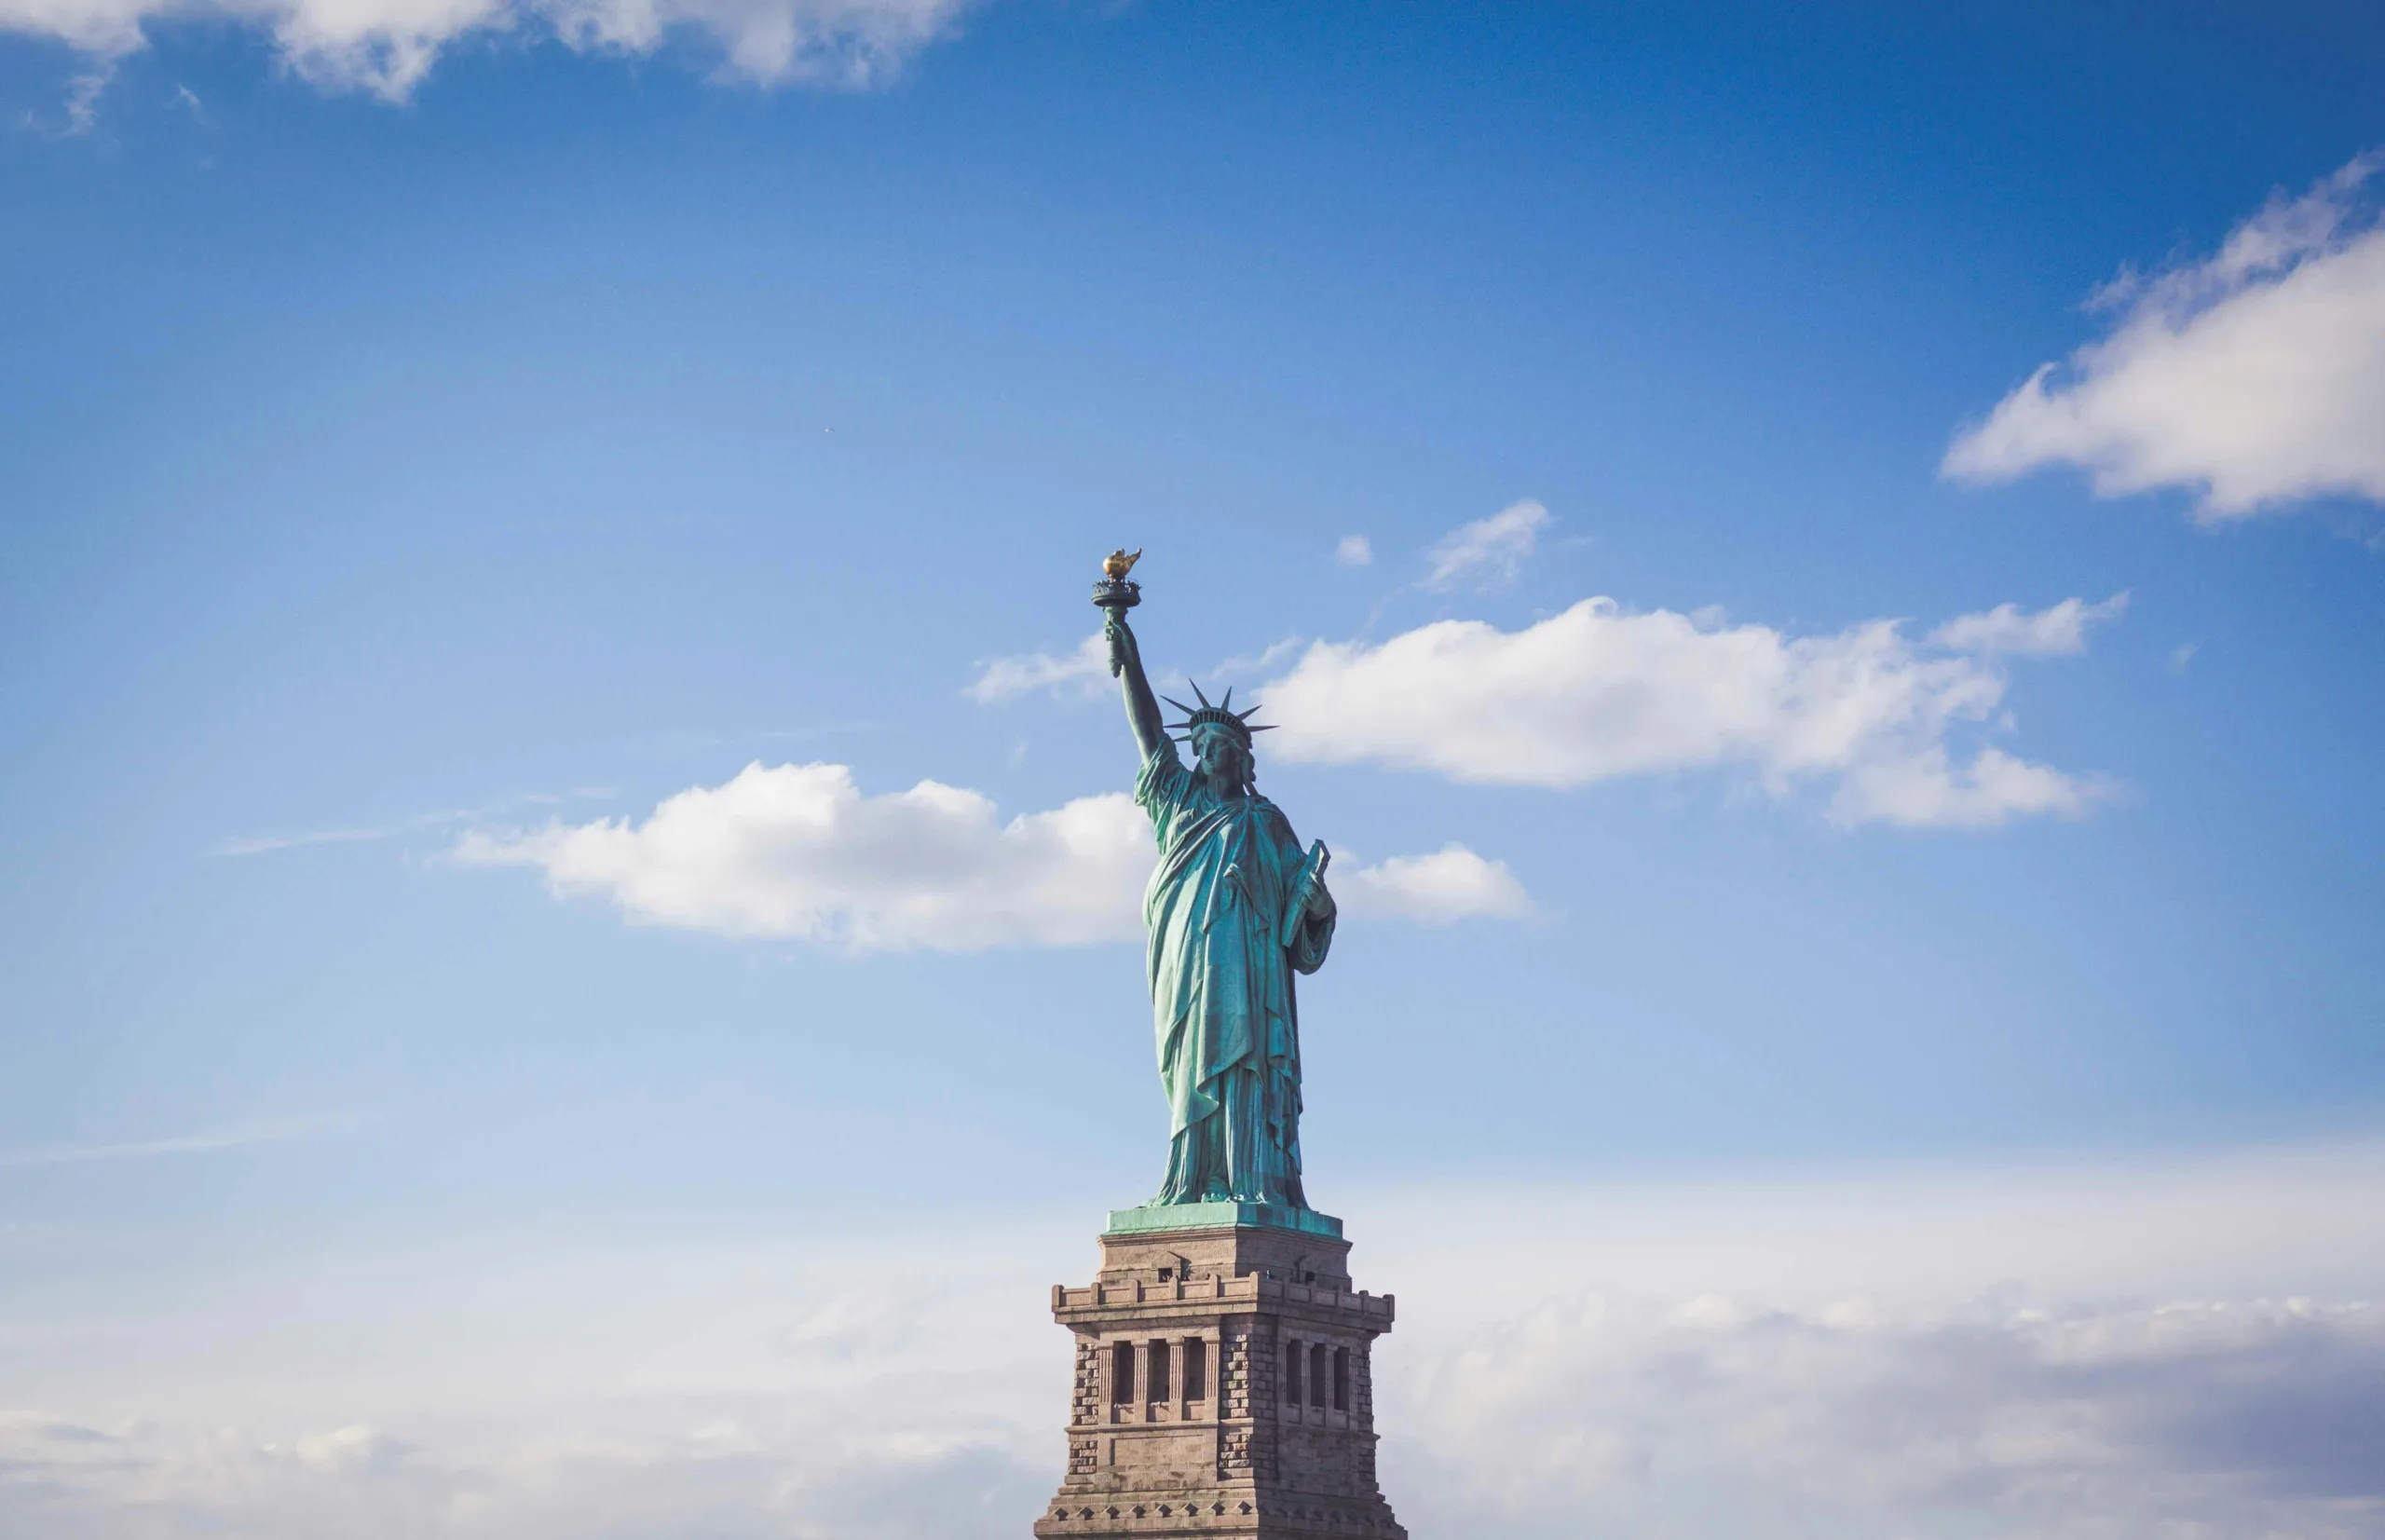 New York Statue of Liberty_ferdinand-stohr-PeFk7fzxTdk-unsplash-min